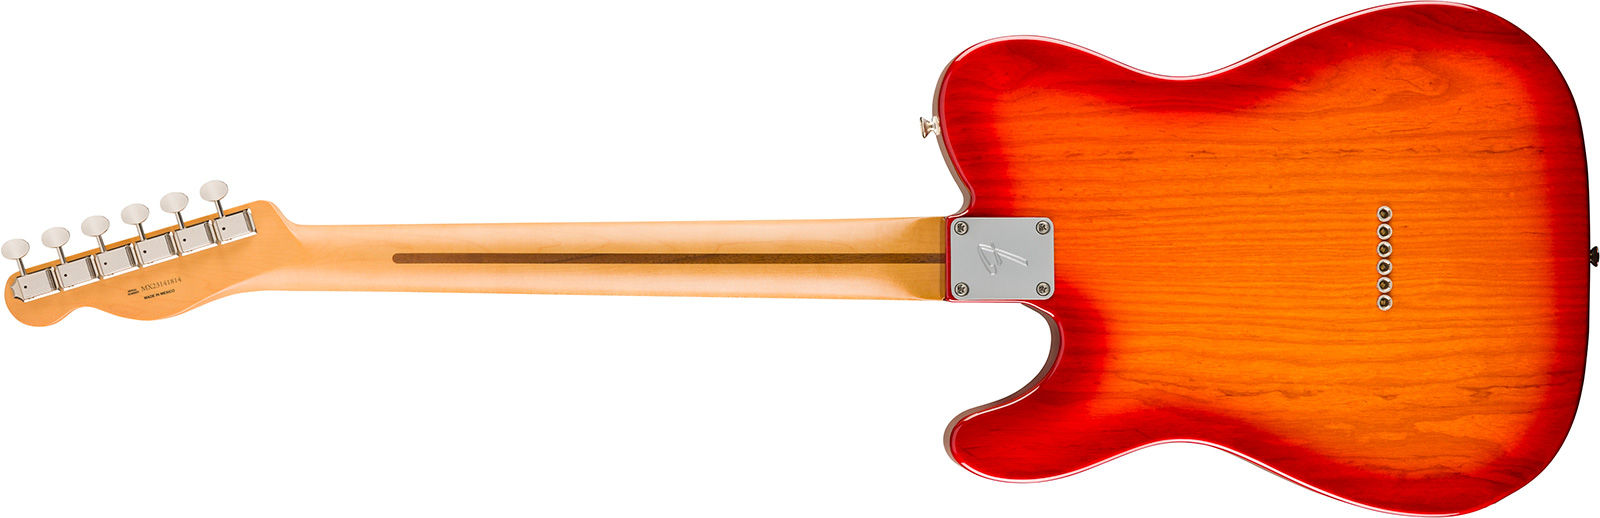 Fender Tele Player Ii Mex Frene 2s Ht Rw - Aged Cherry Burst - Televorm elektrische gitaar - Variation 1